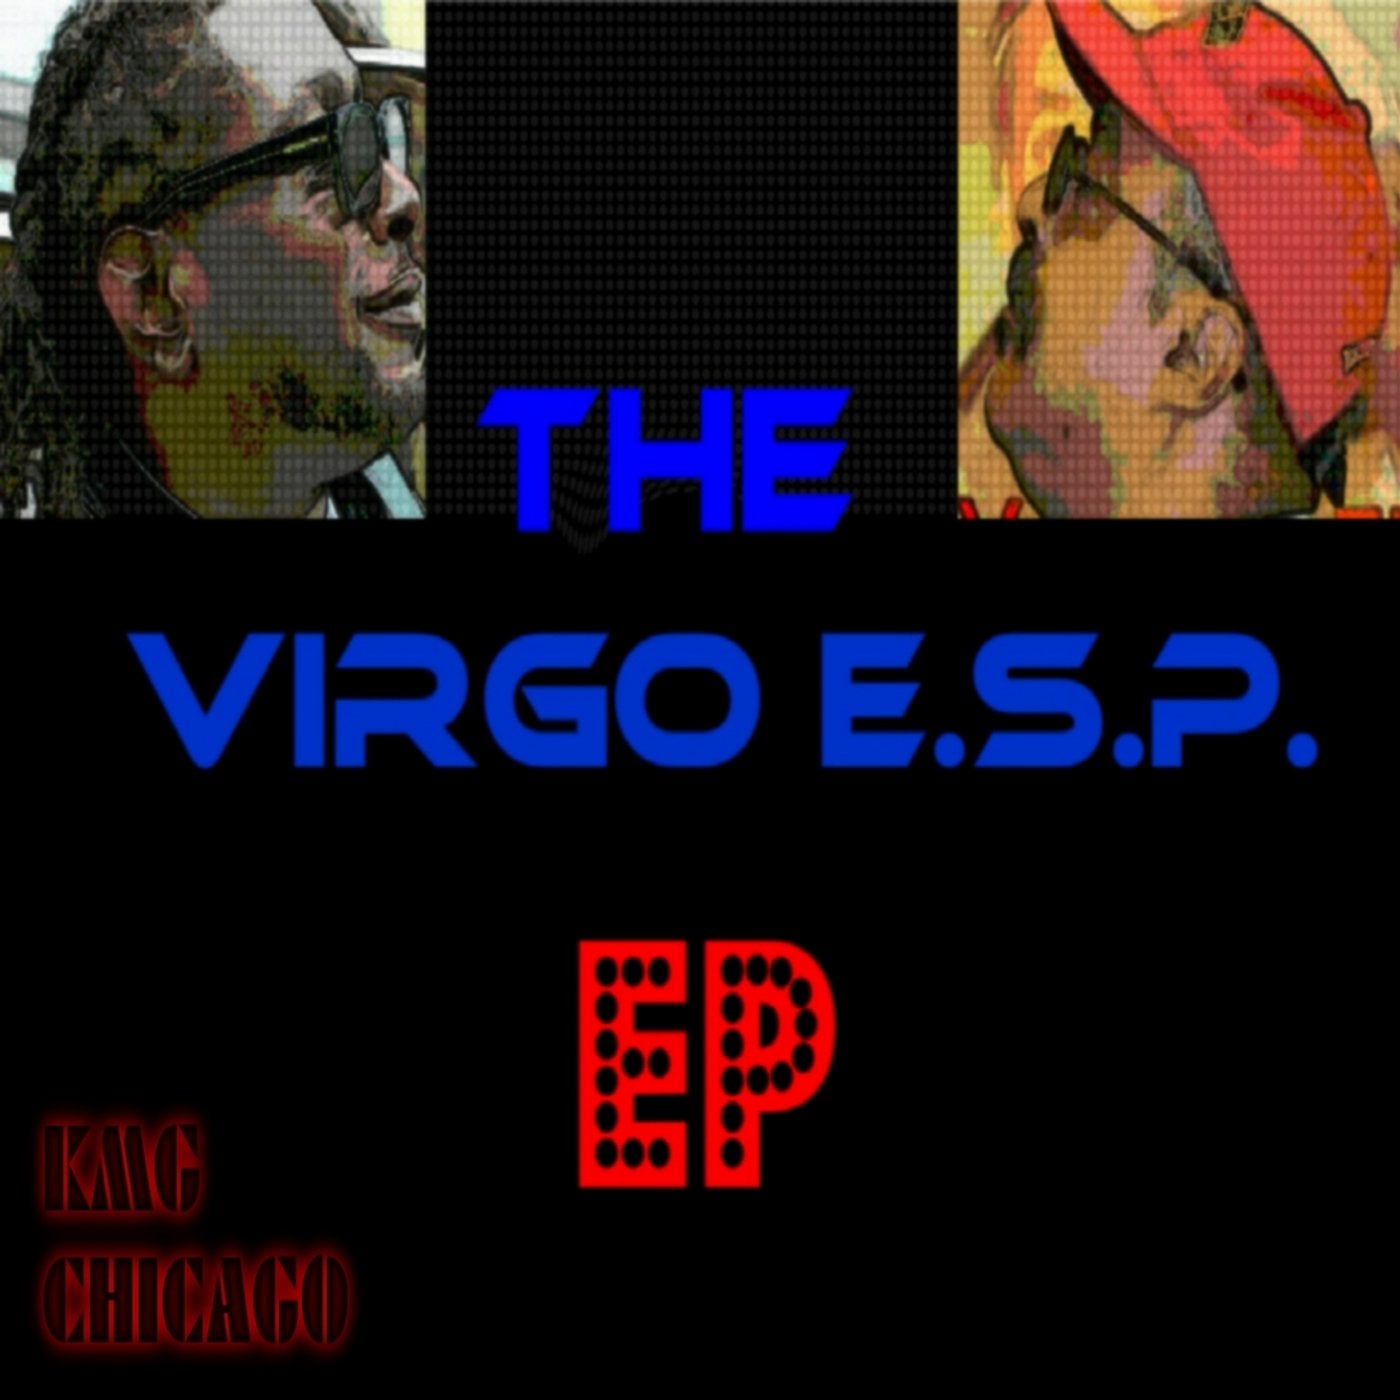 The Virgo E.S.P.